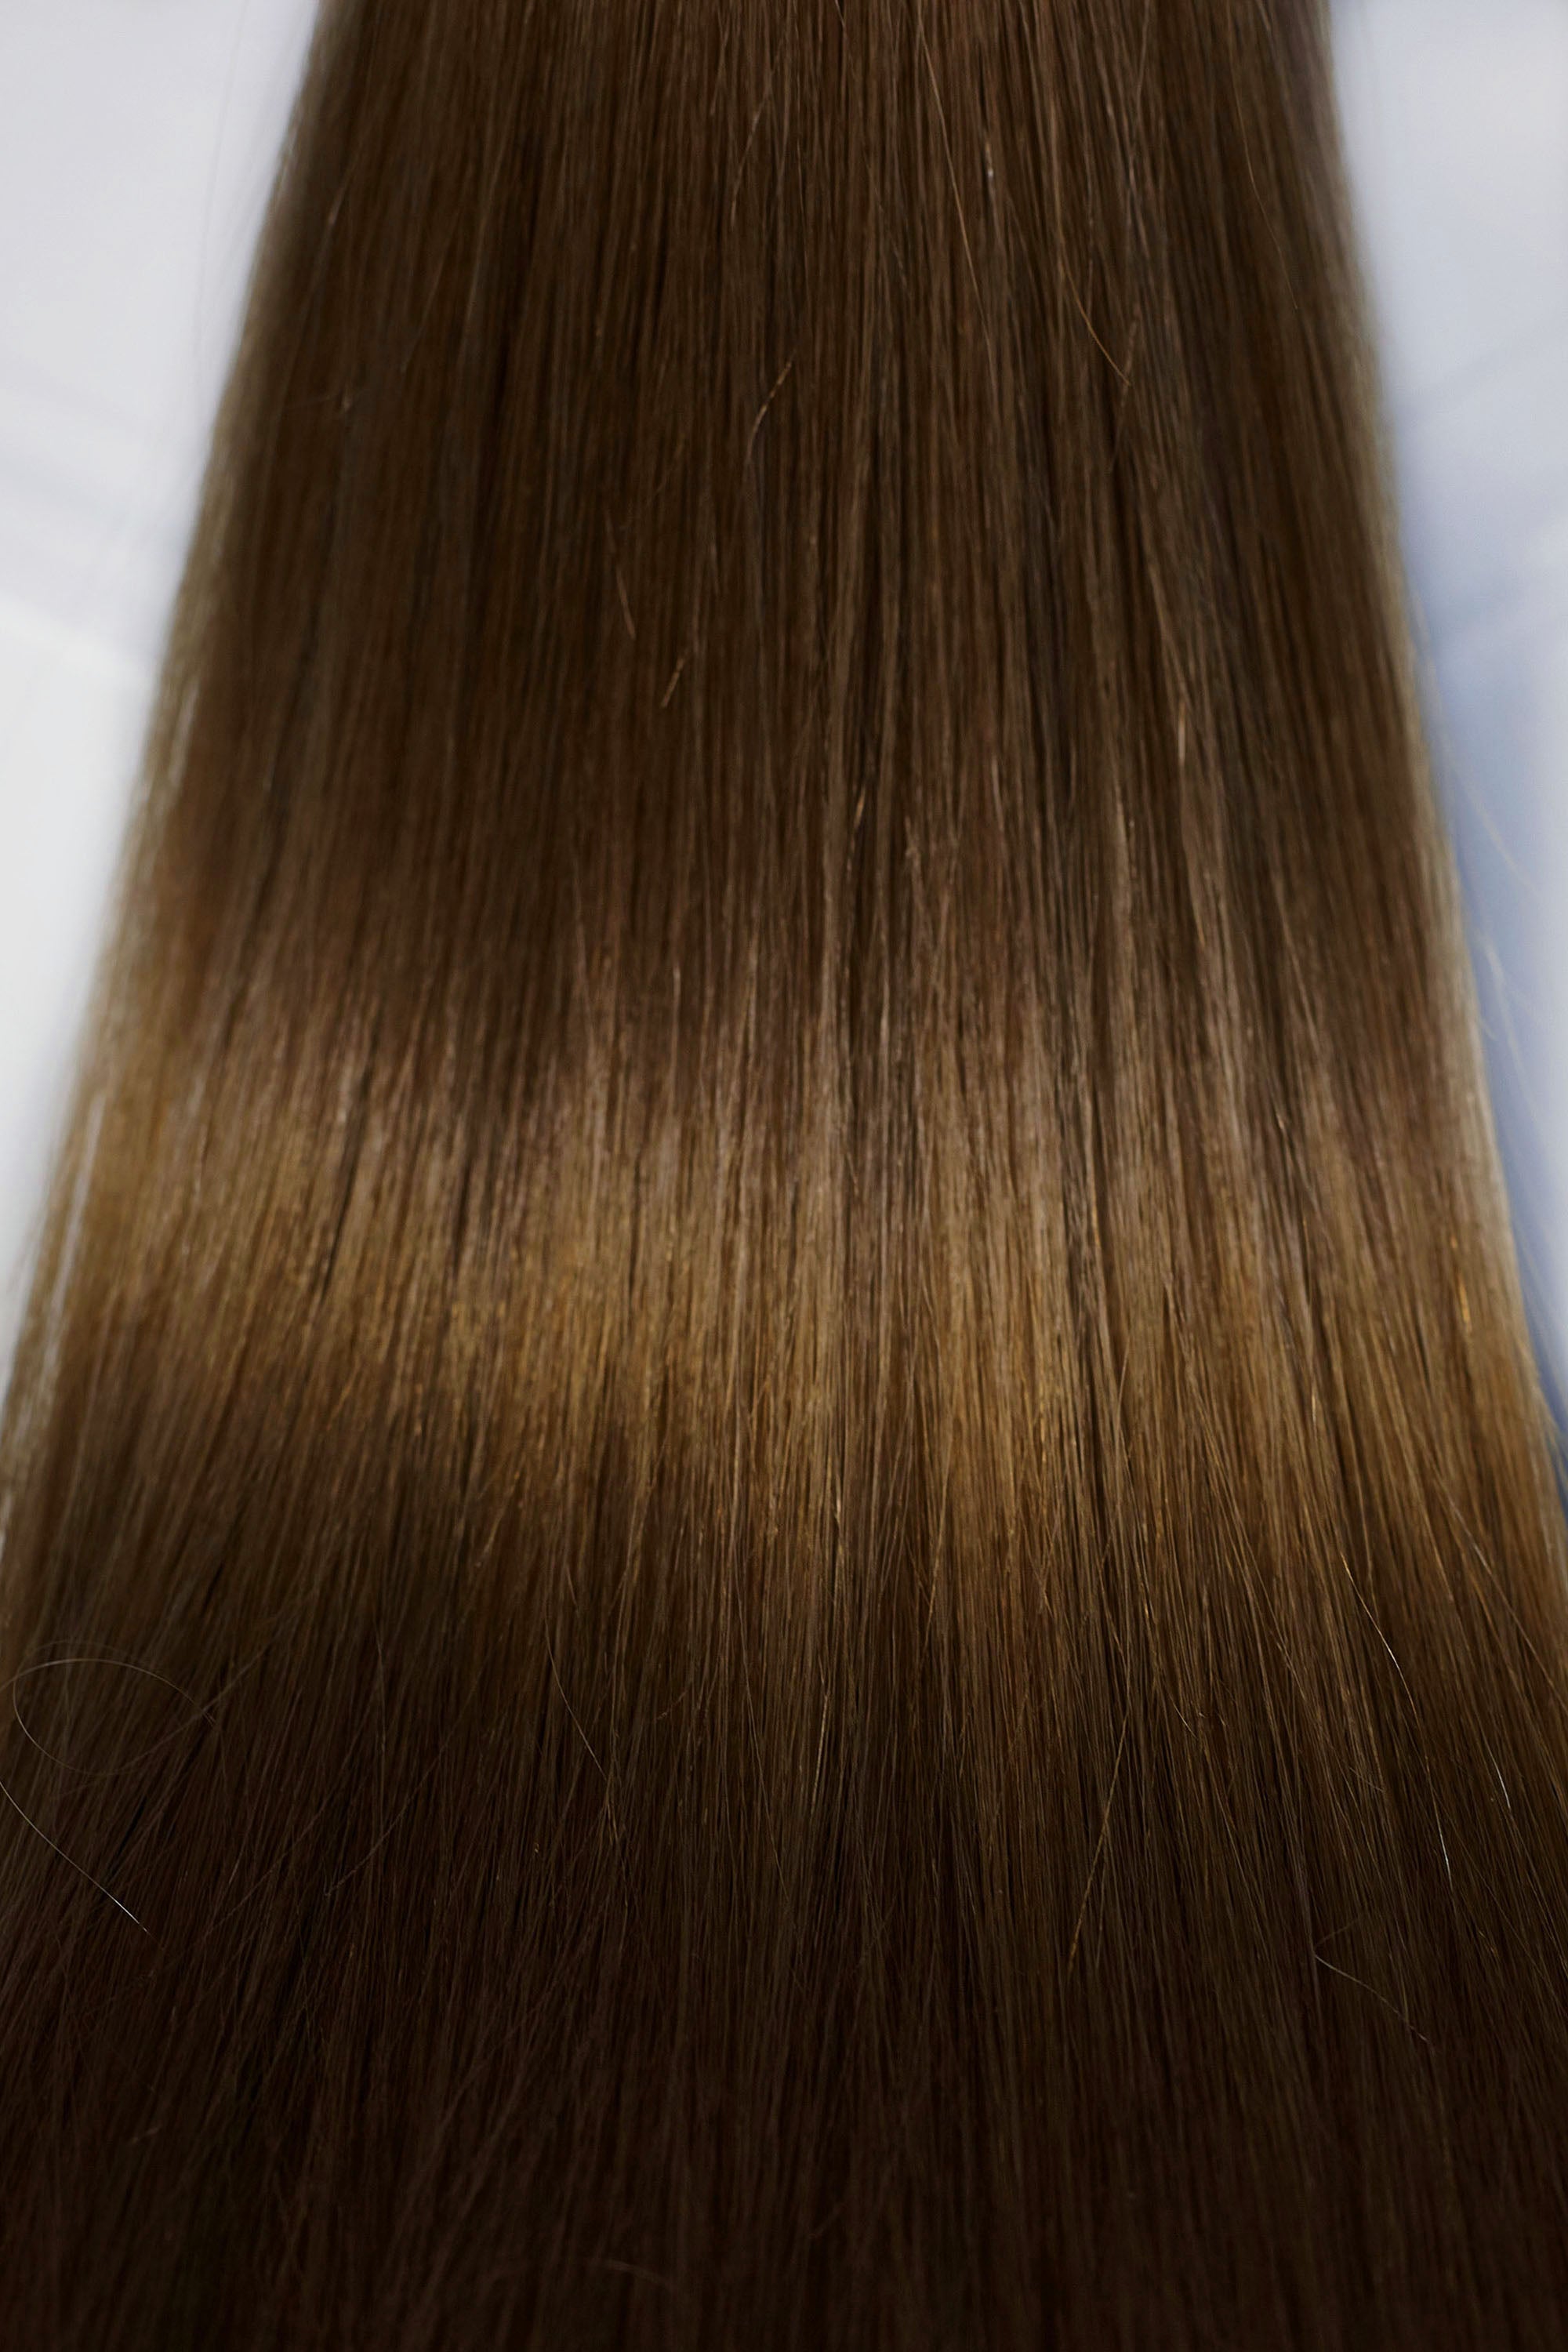 Behair professional Keratin Tip "Premium" 18" (45cm) Natural Straight Honey Walnut Brown #5 - 25g (Micro - 0.5g each pcs) hair extensions